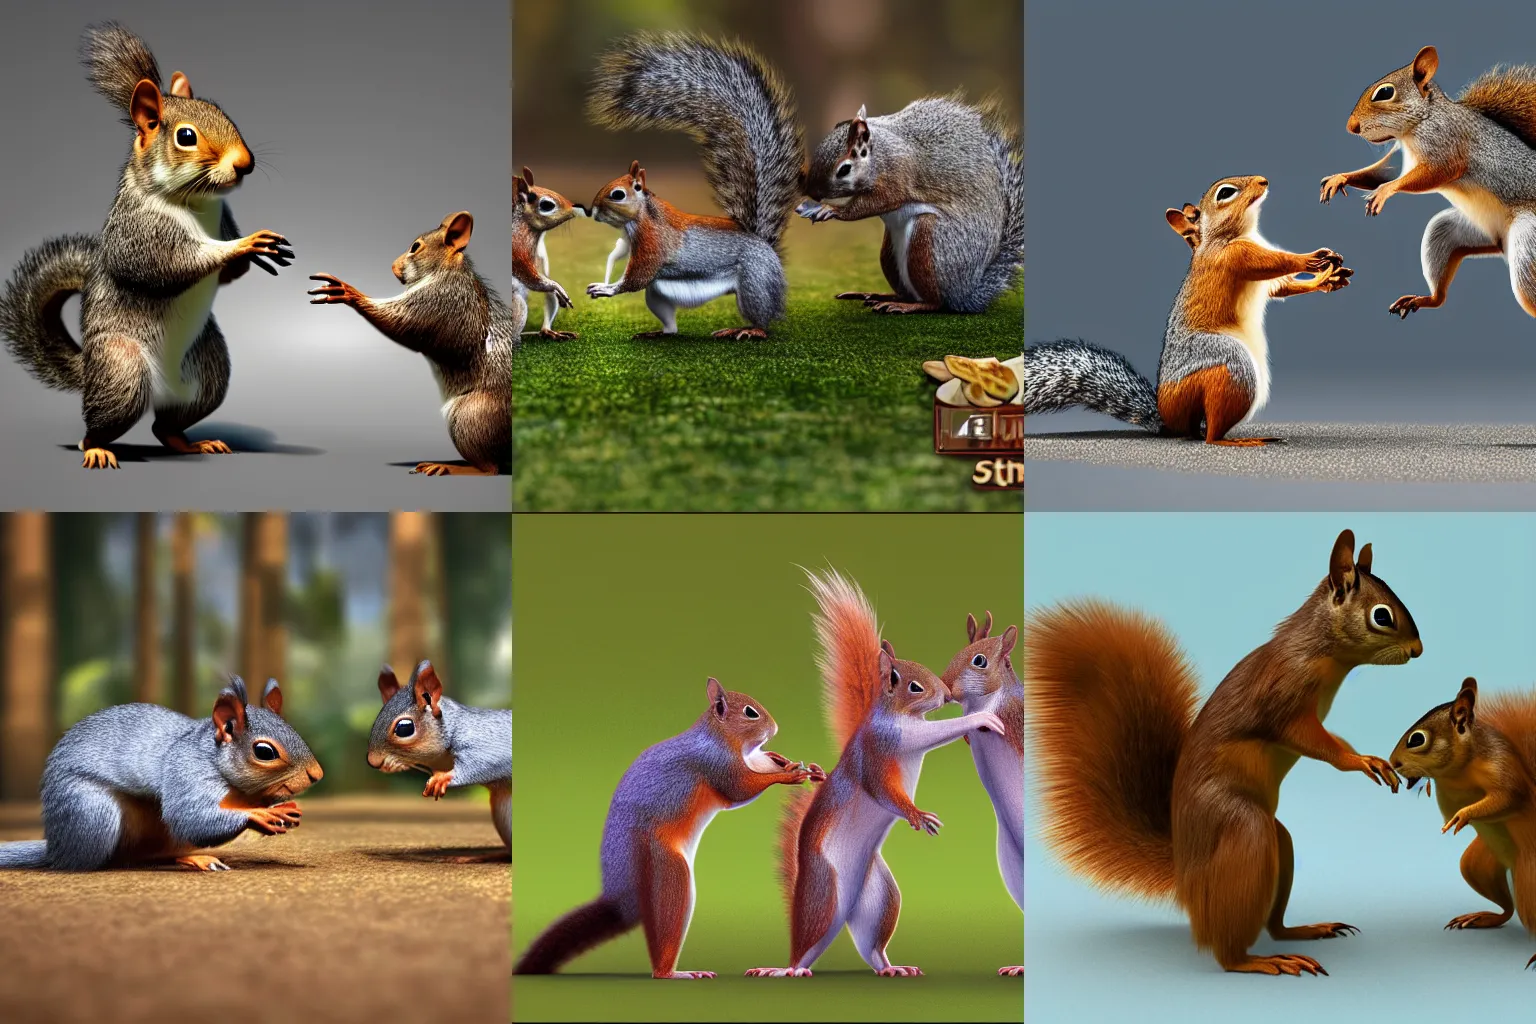 Prompt: squirrels fighting in a wellnes resort, 3D render